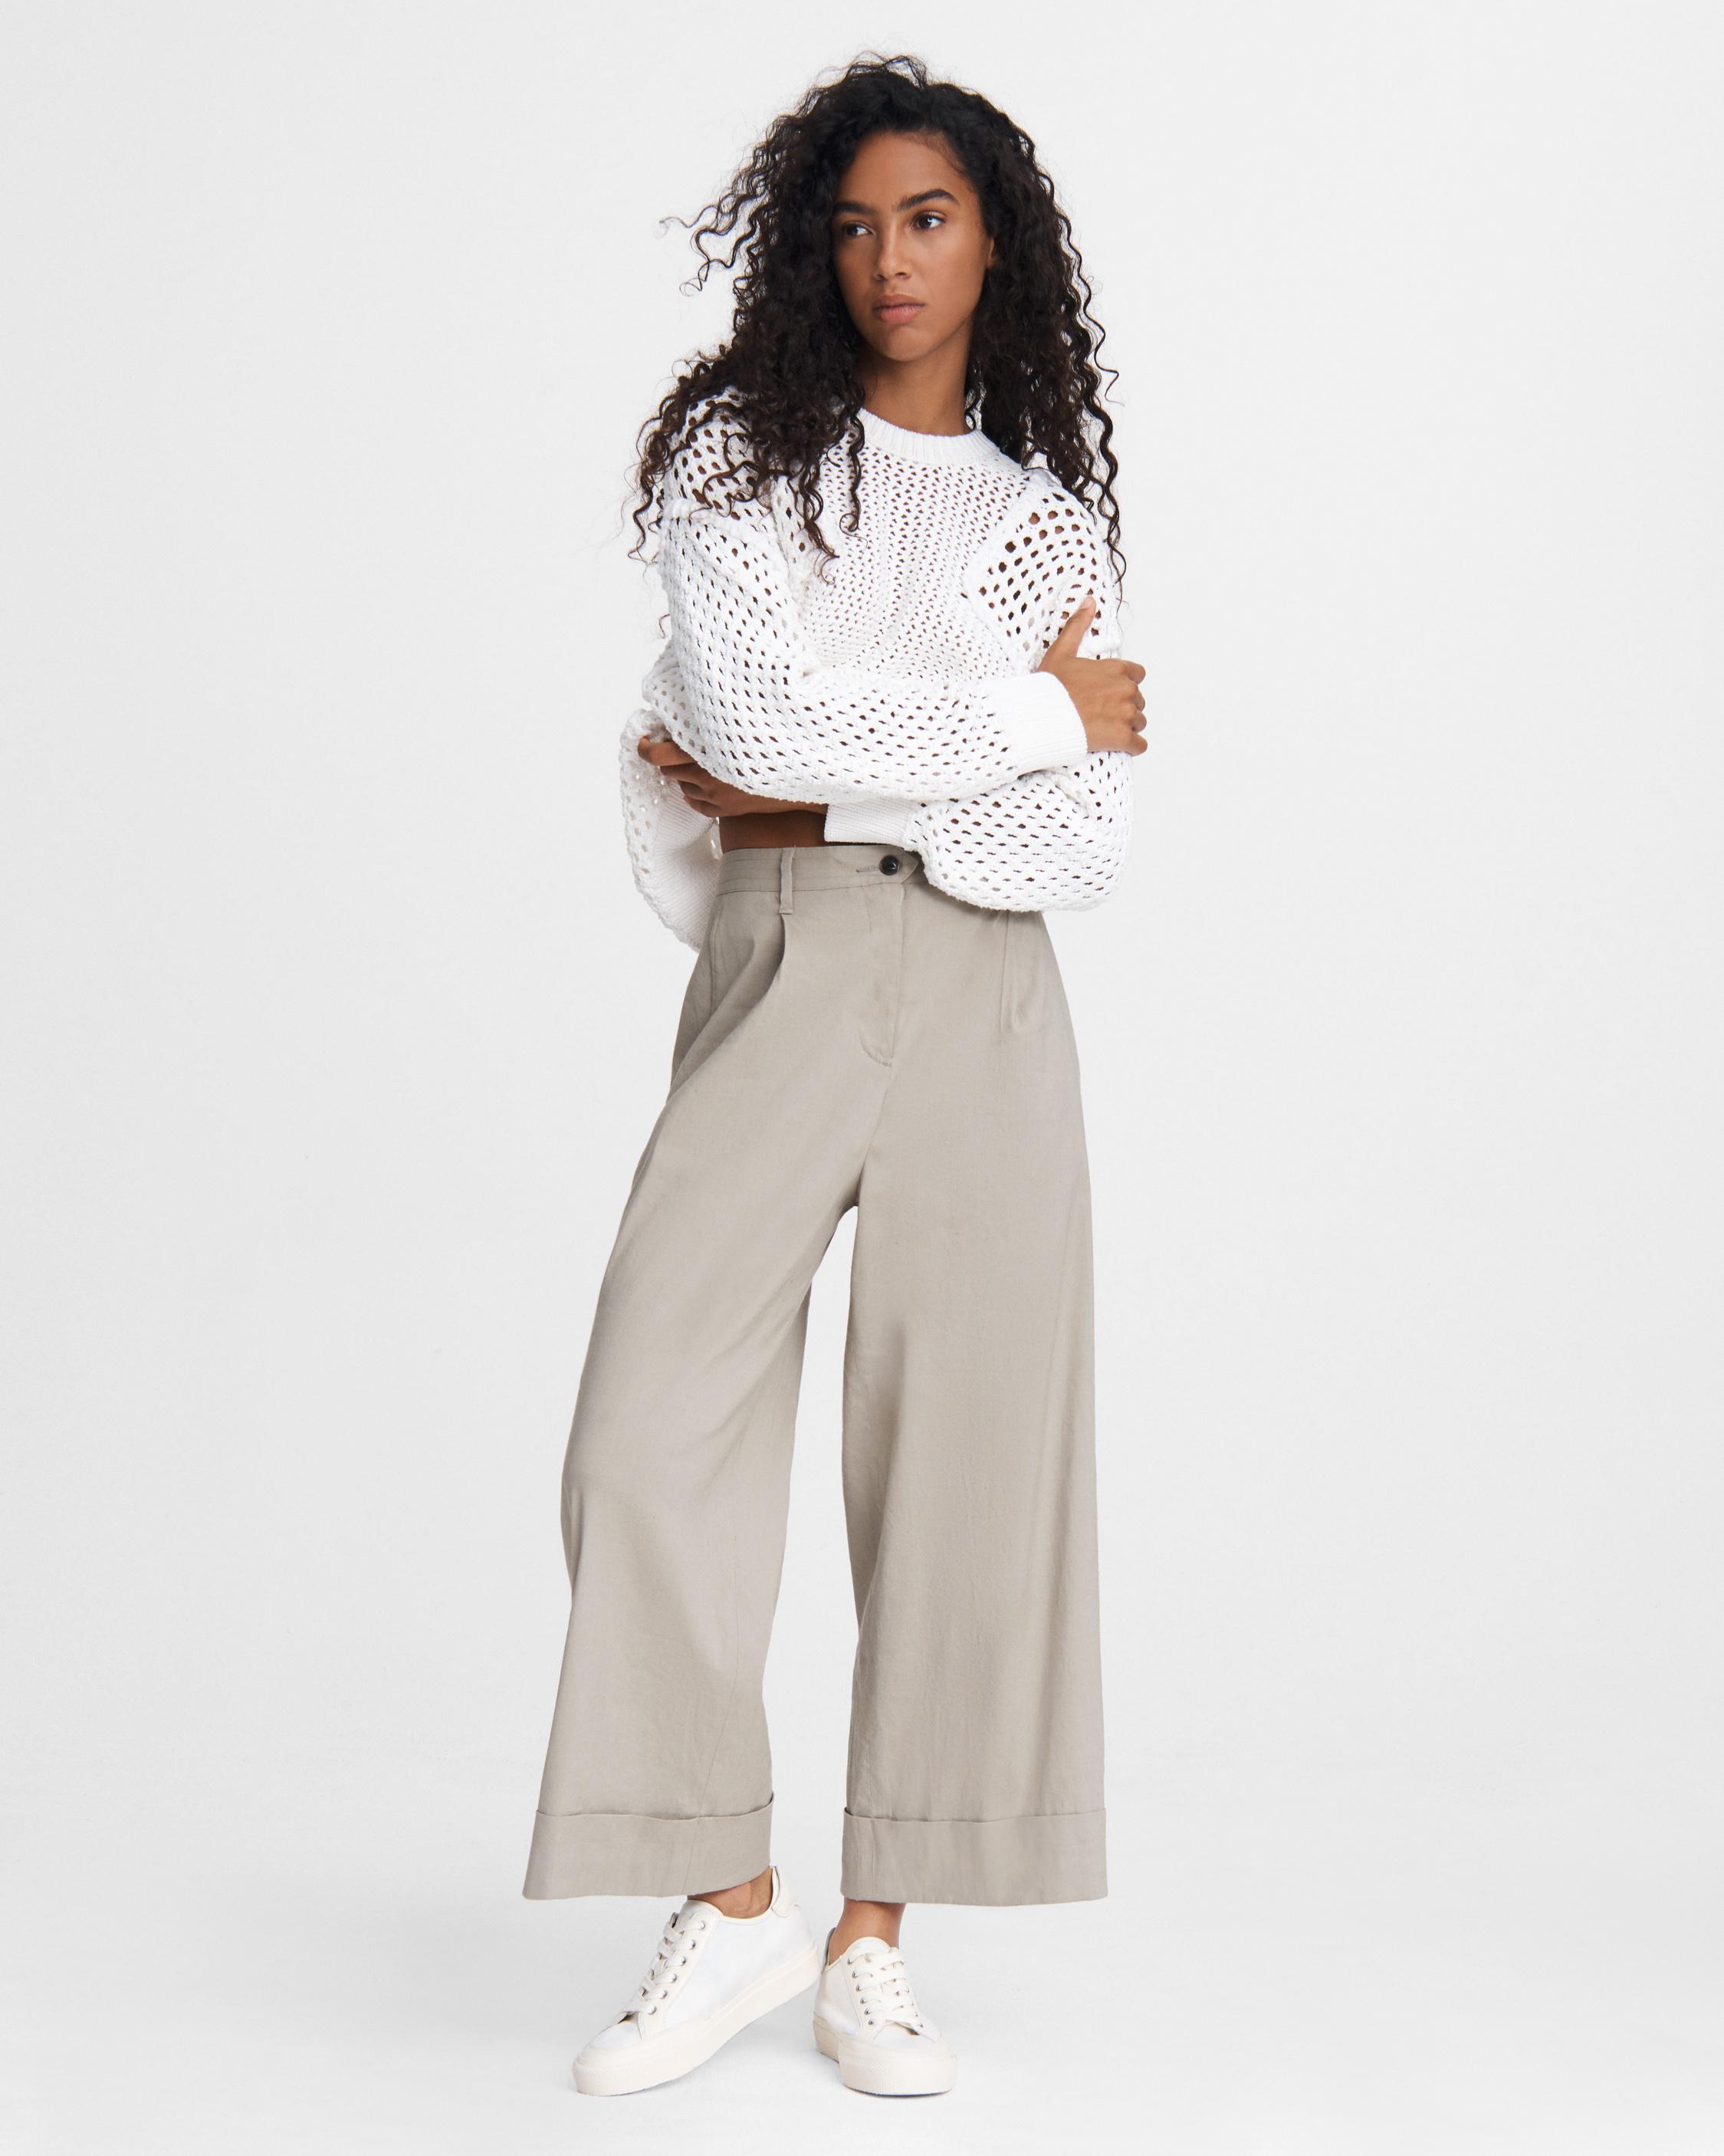 High-Waisted Linen-Blend Plus-Size Culotte Pants